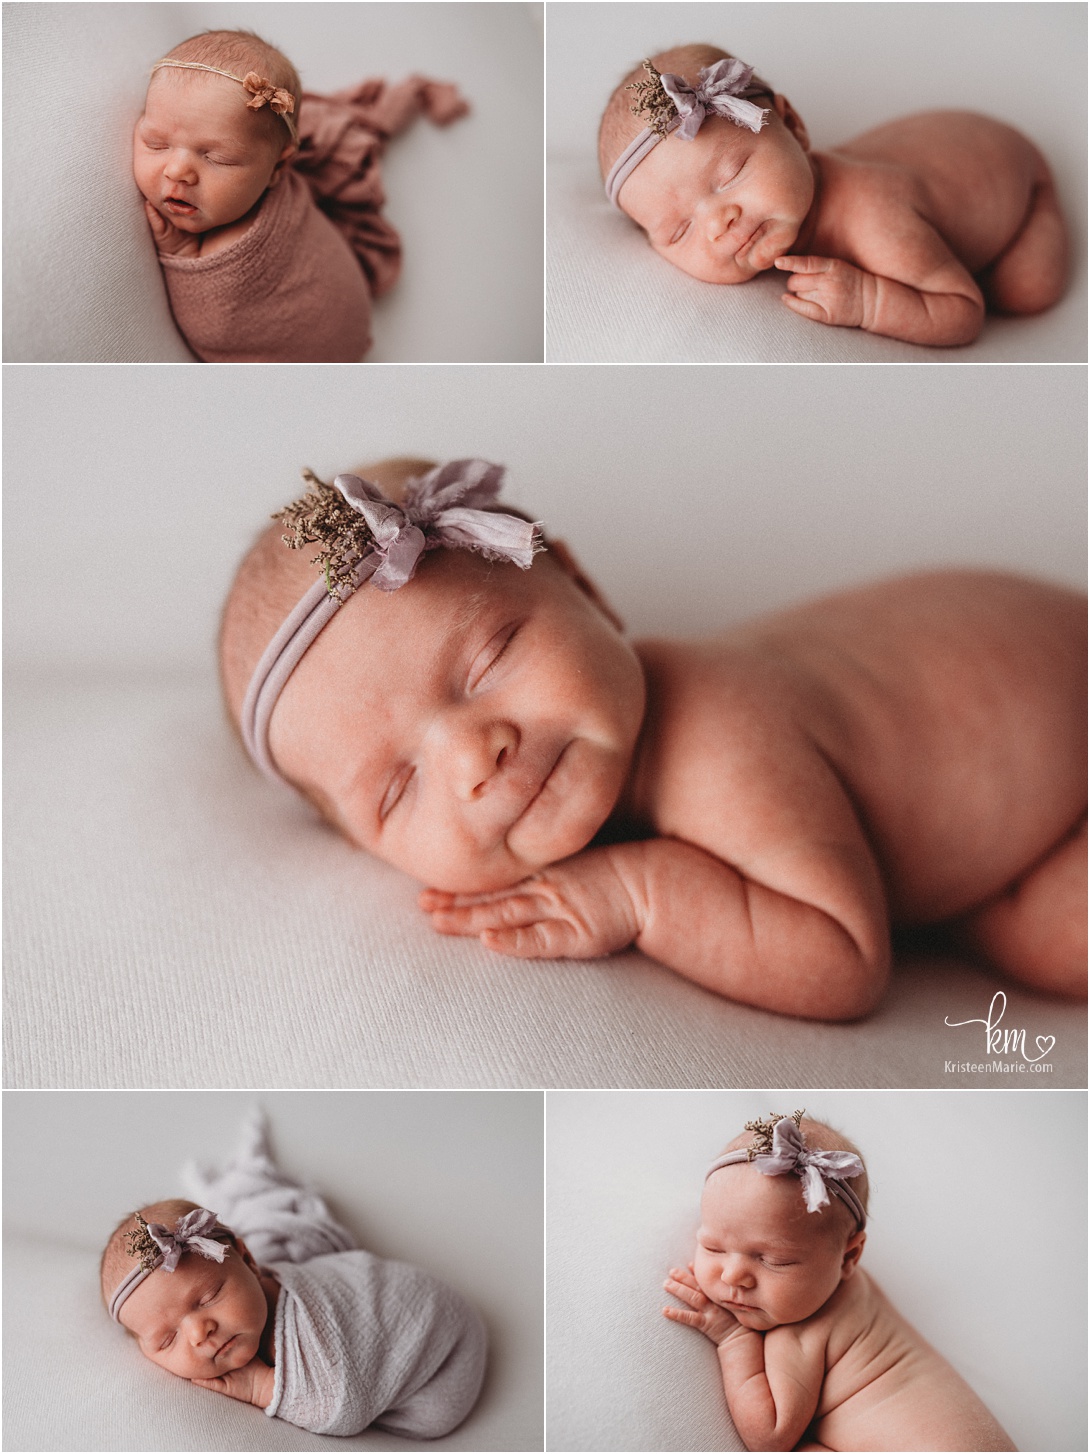 Noblesville newborn photography - sleeping poses on white backdrop